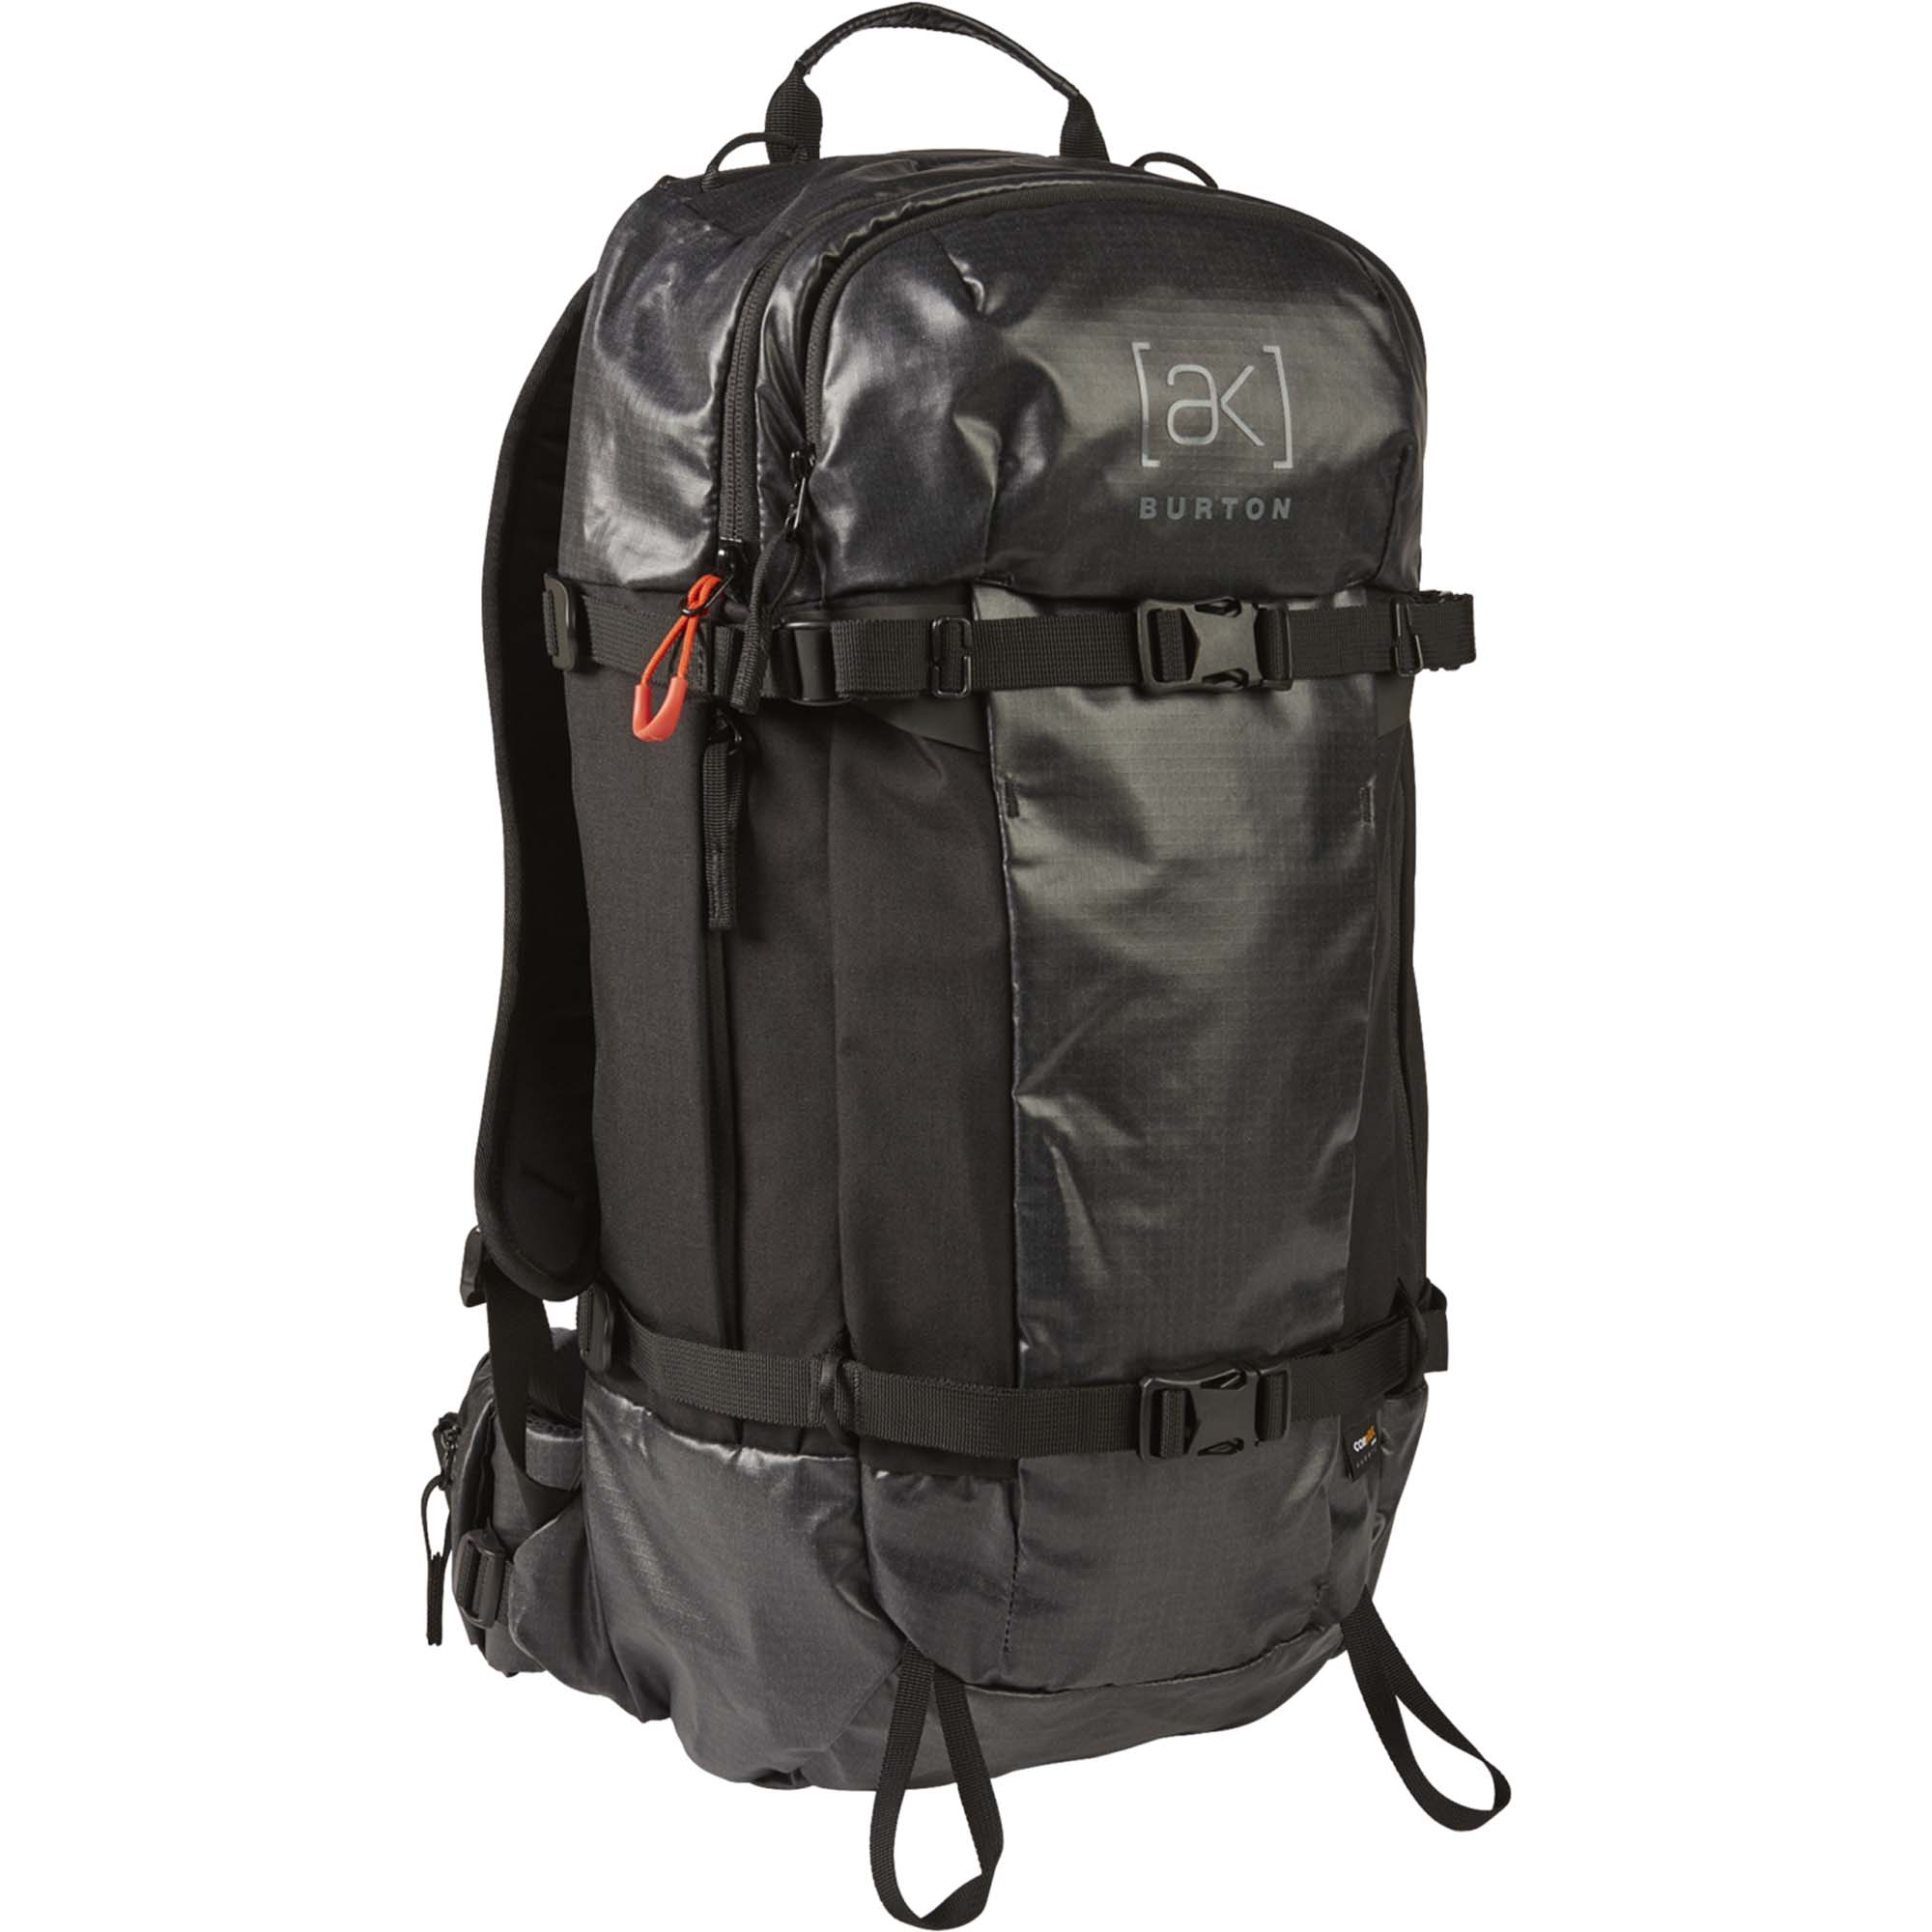 Burton [ak] Dispatcher 25 Water Resistant Backpack